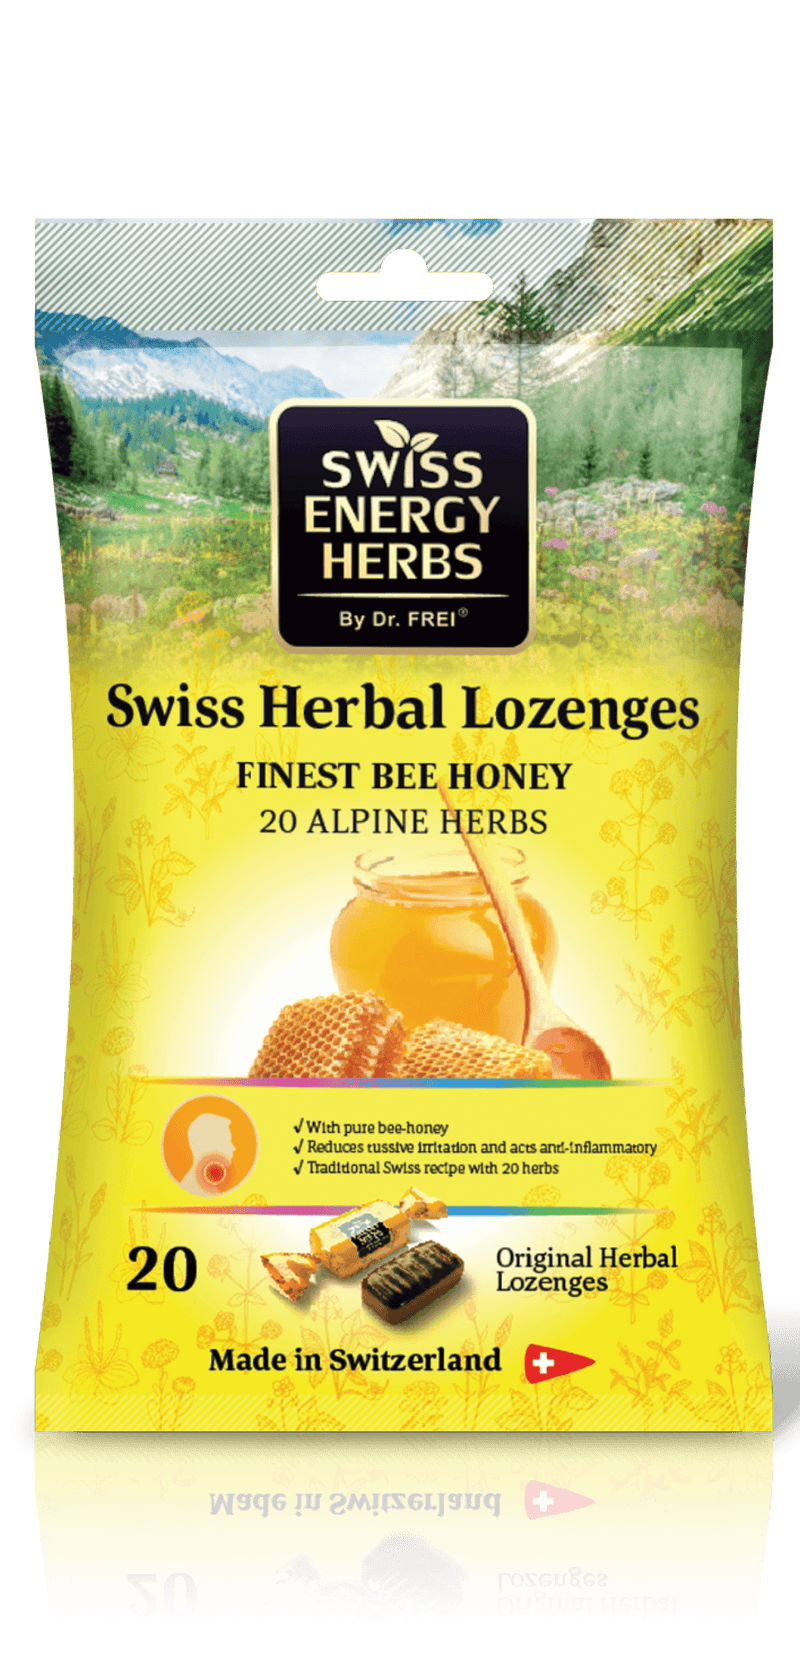 Swiss Energy Herbs®, 20 alpine herbs,herbal-honey, cough and sore throat lozenges, 55g.